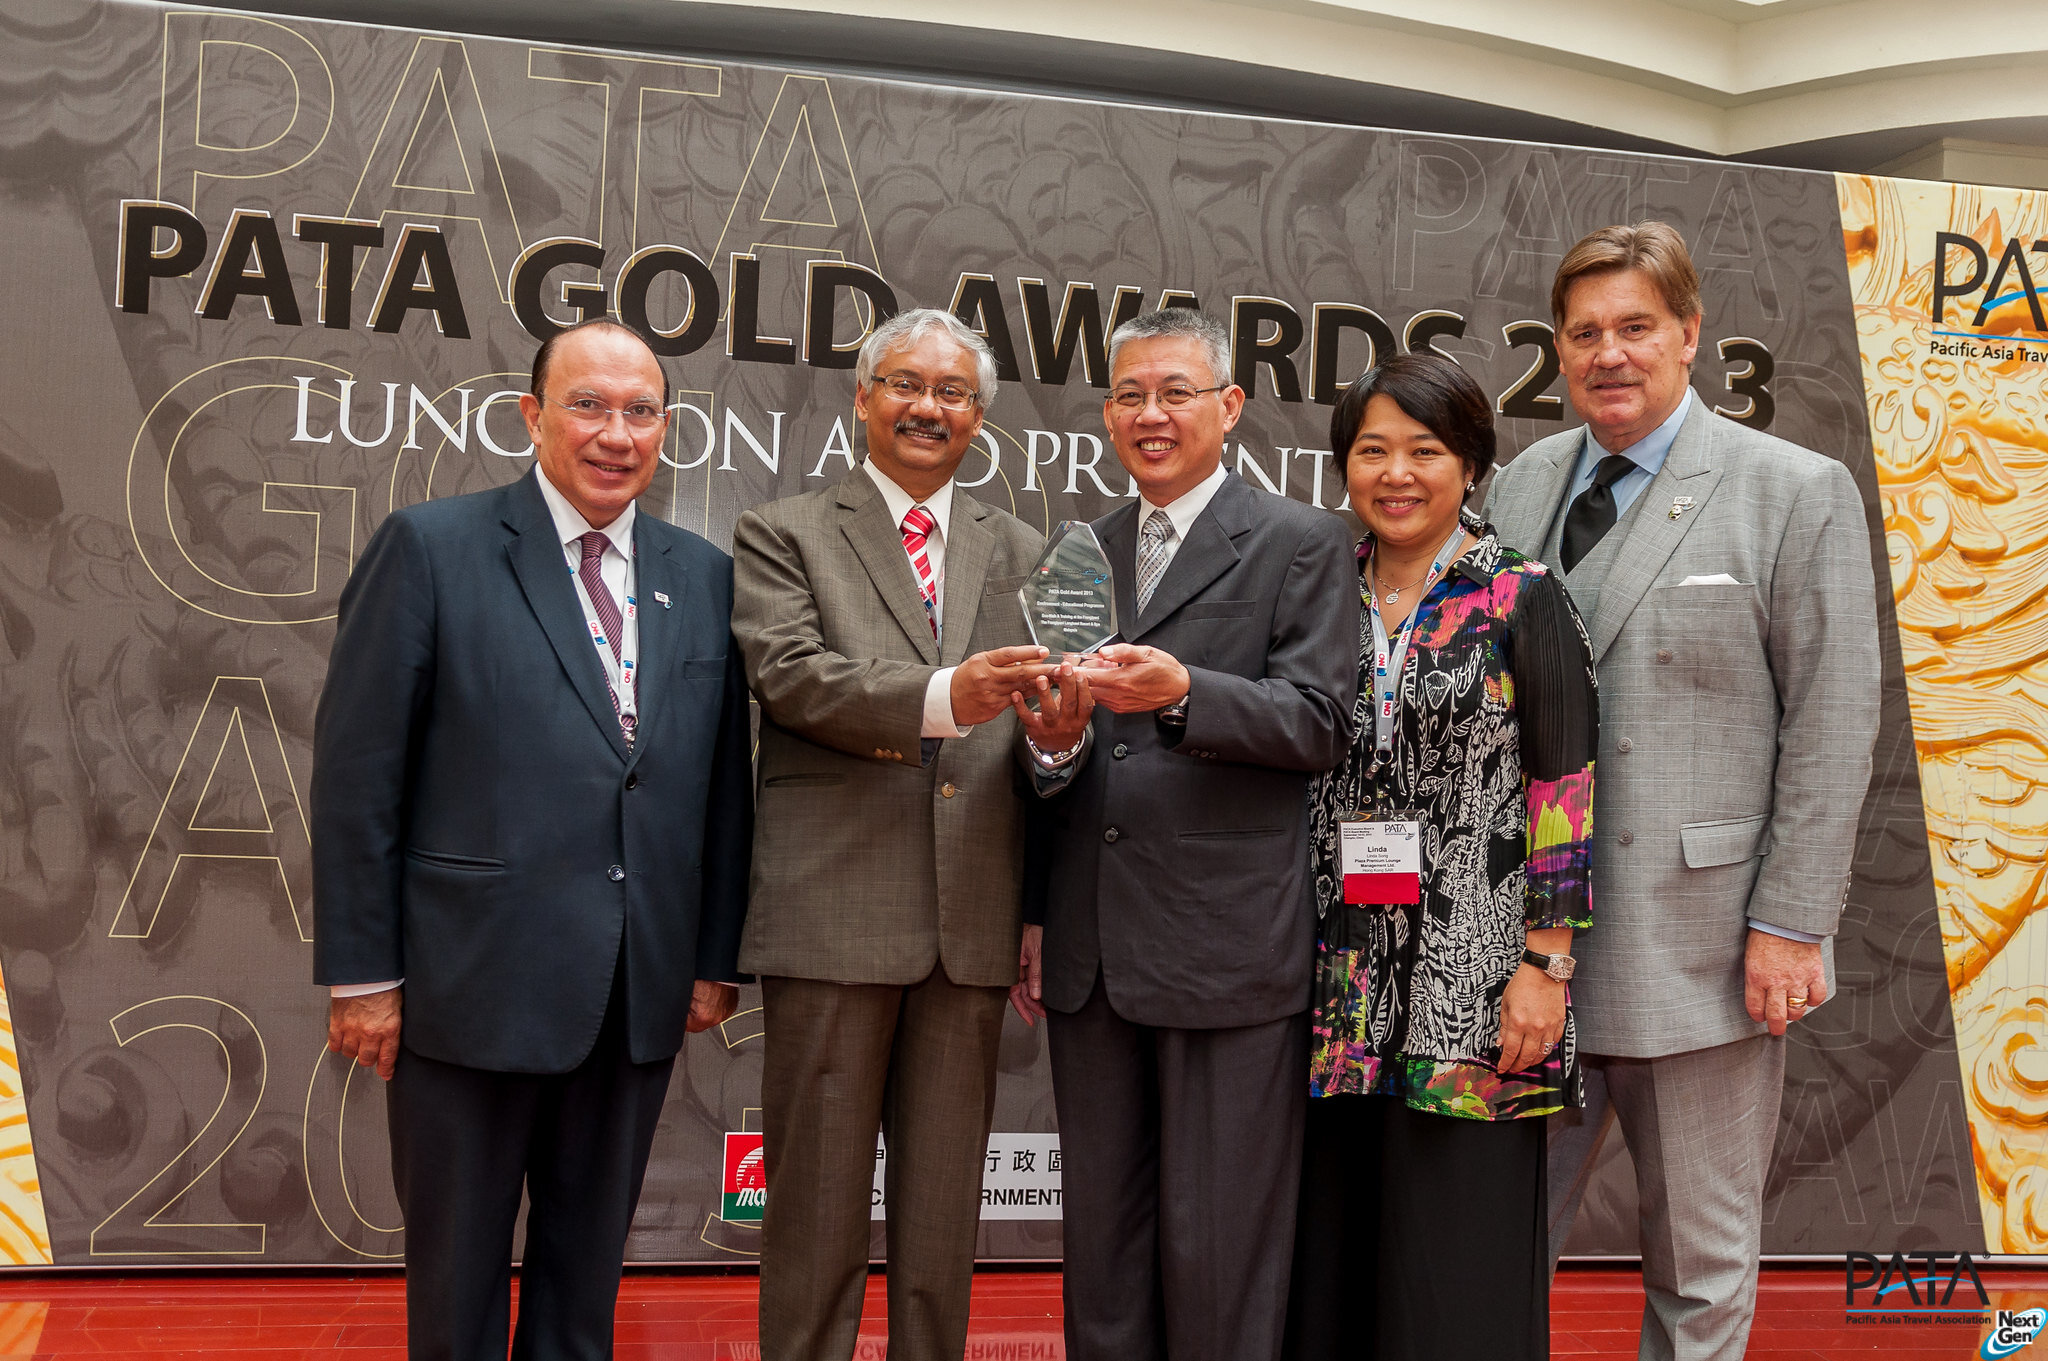 2013: PATA Gold Awards in Shanghai, China